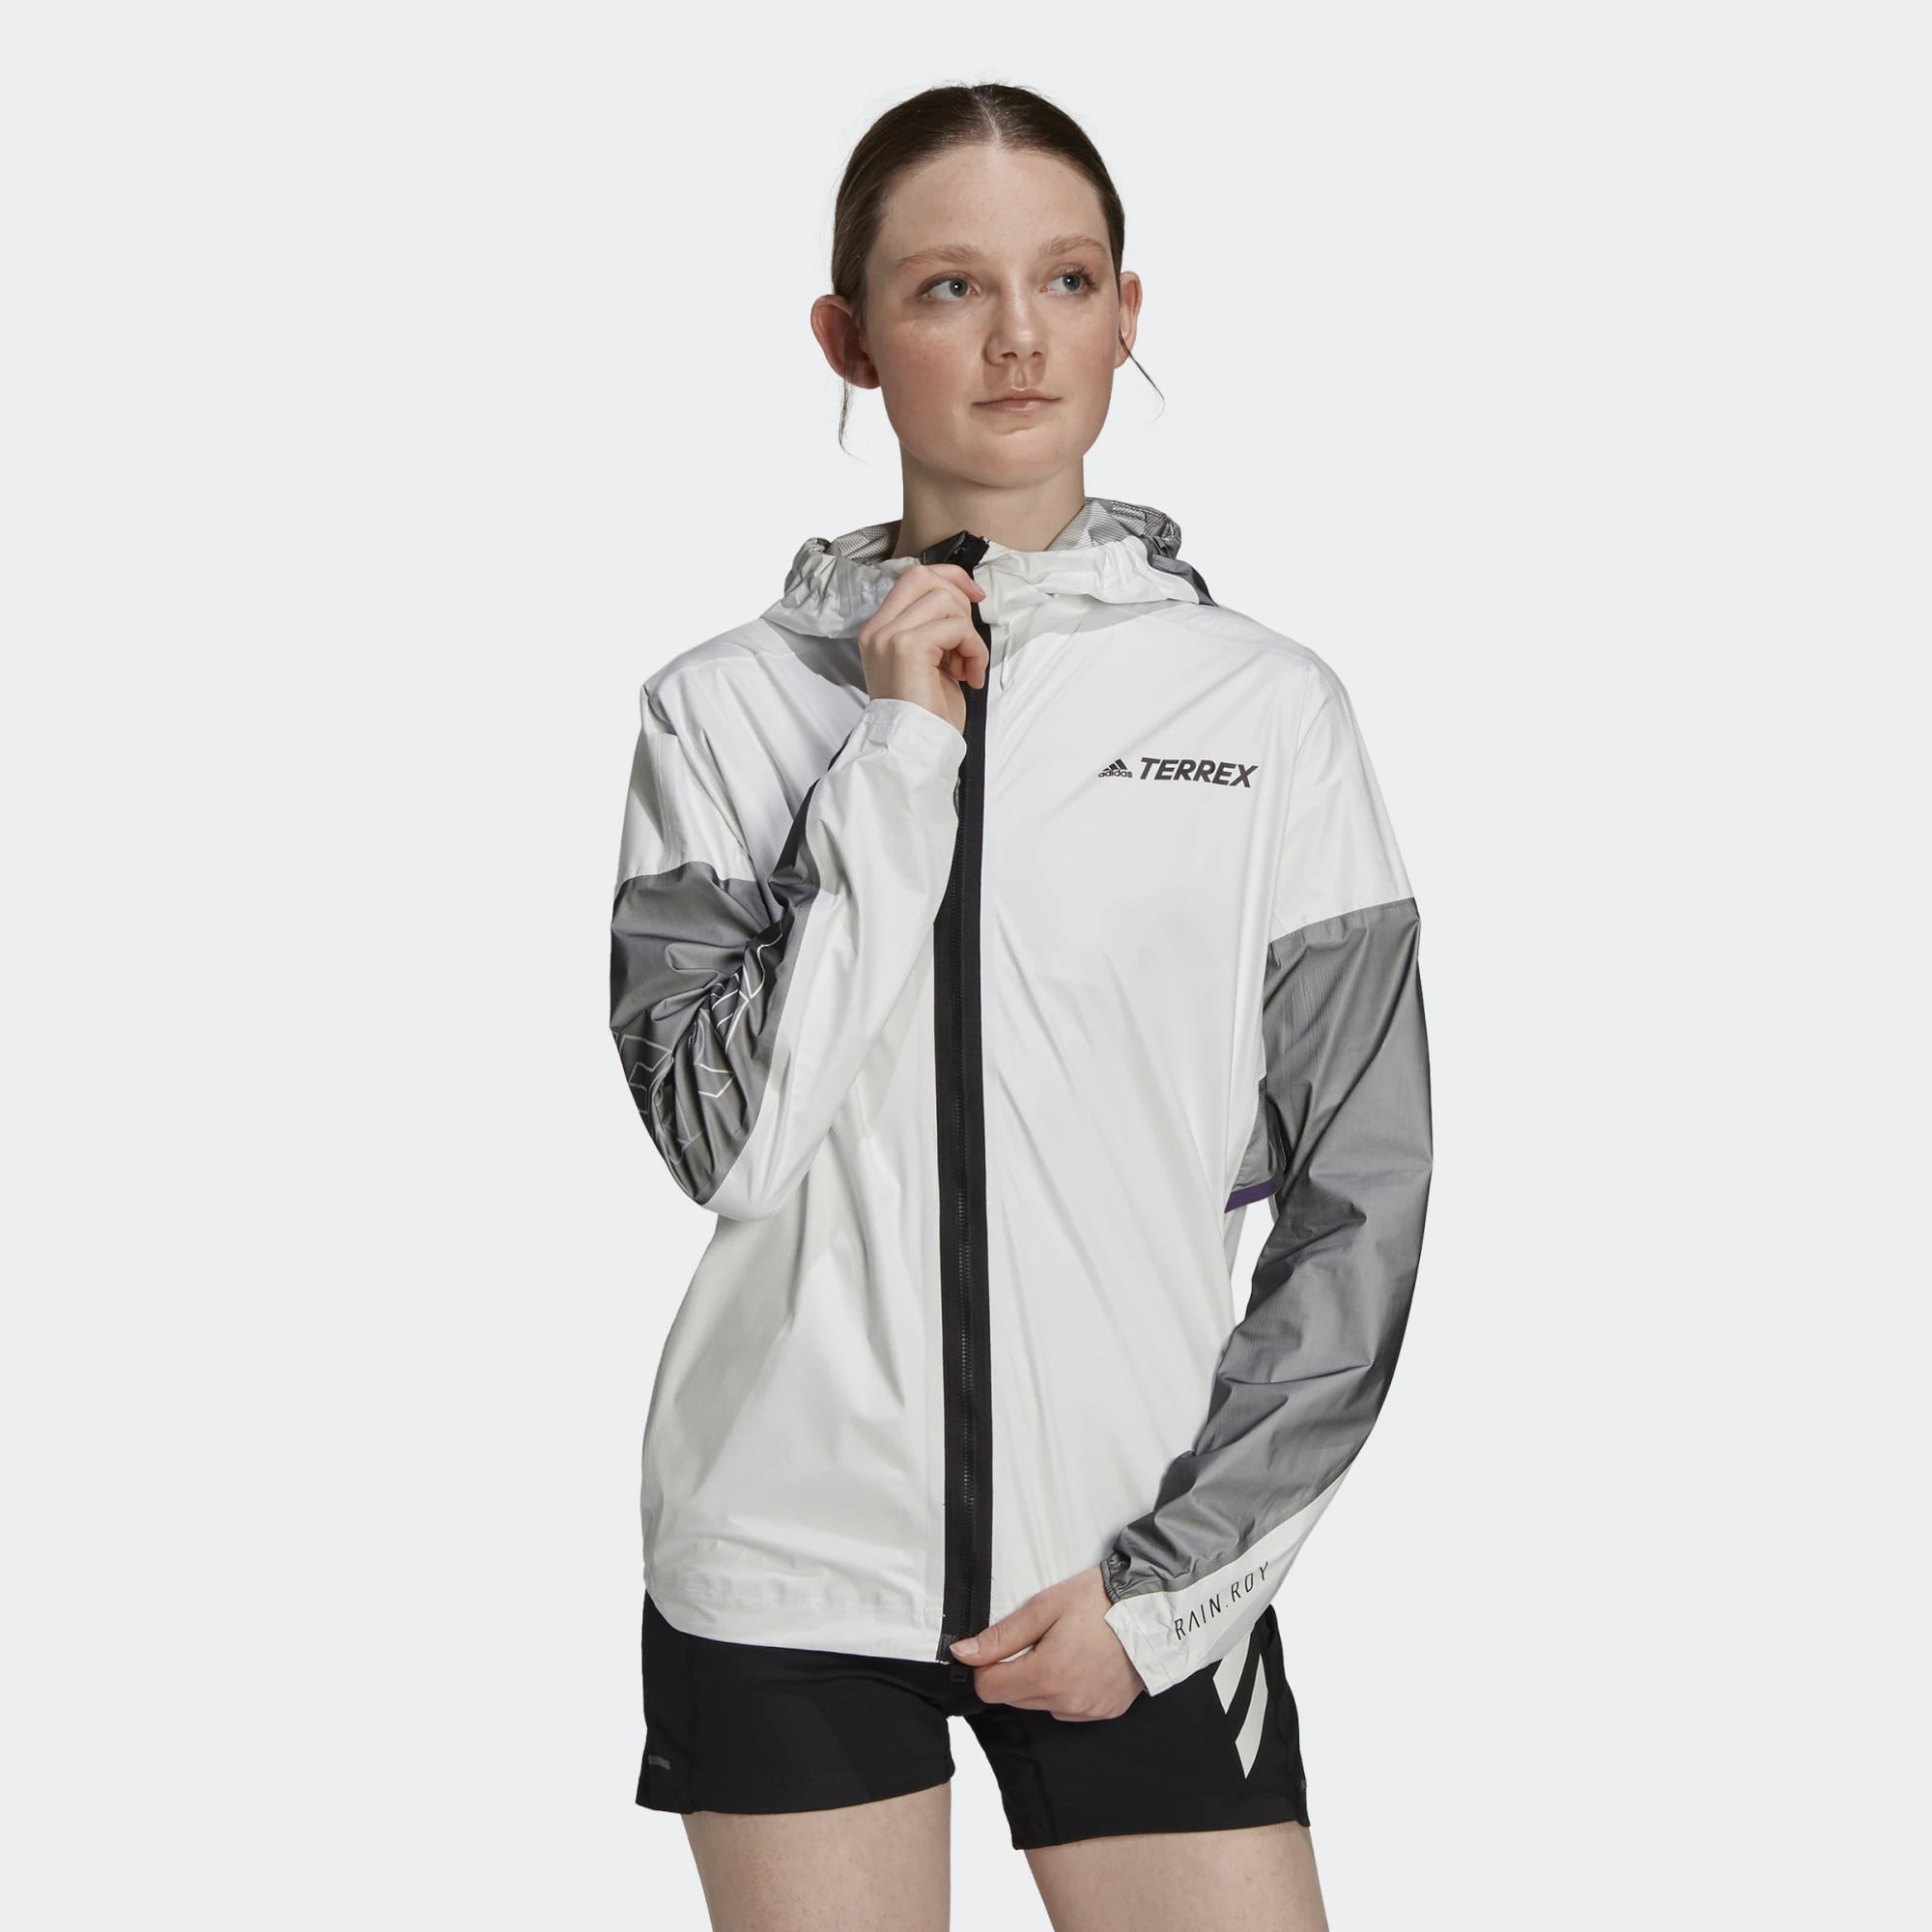 Adidas Women's Terrex Agravic Lightweight Waterproof Trail Running Rain Jacket - White/Black (Medium) Walmart.com